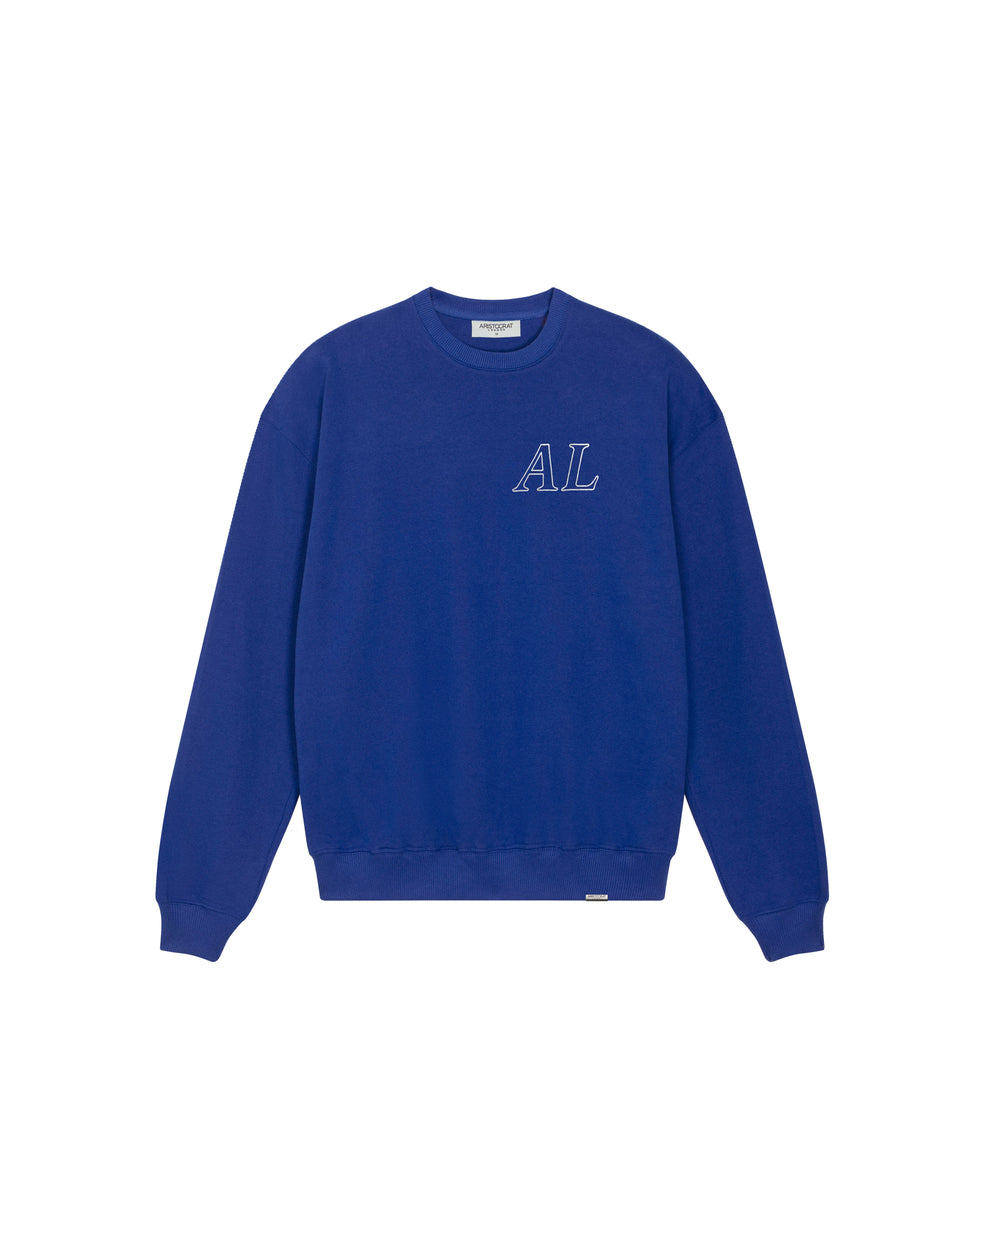 AL Contour Sweater - Cobalt Blue